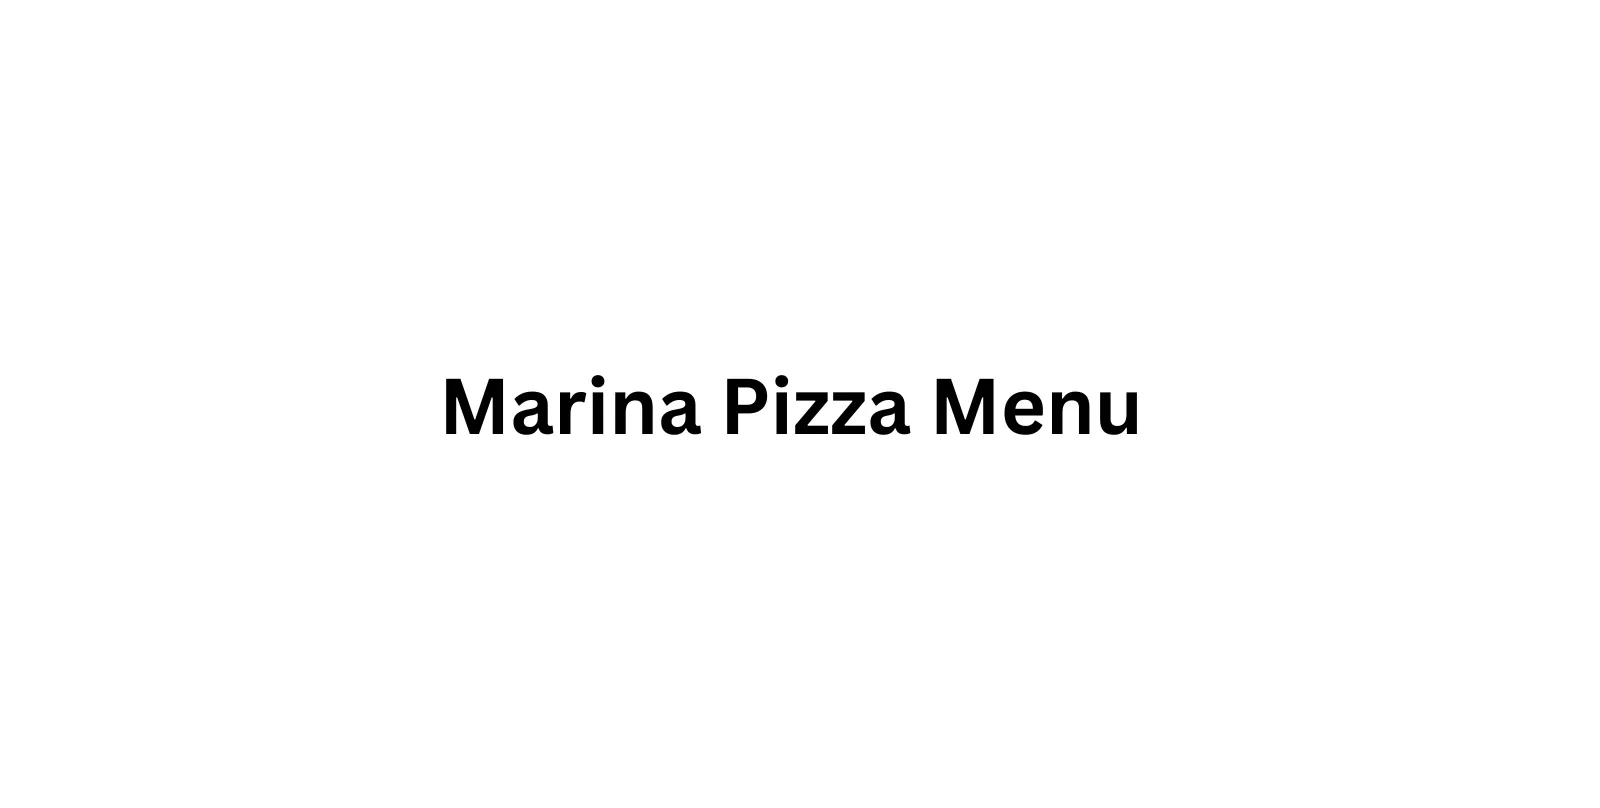 Marina Pizza Menu Prices Australia